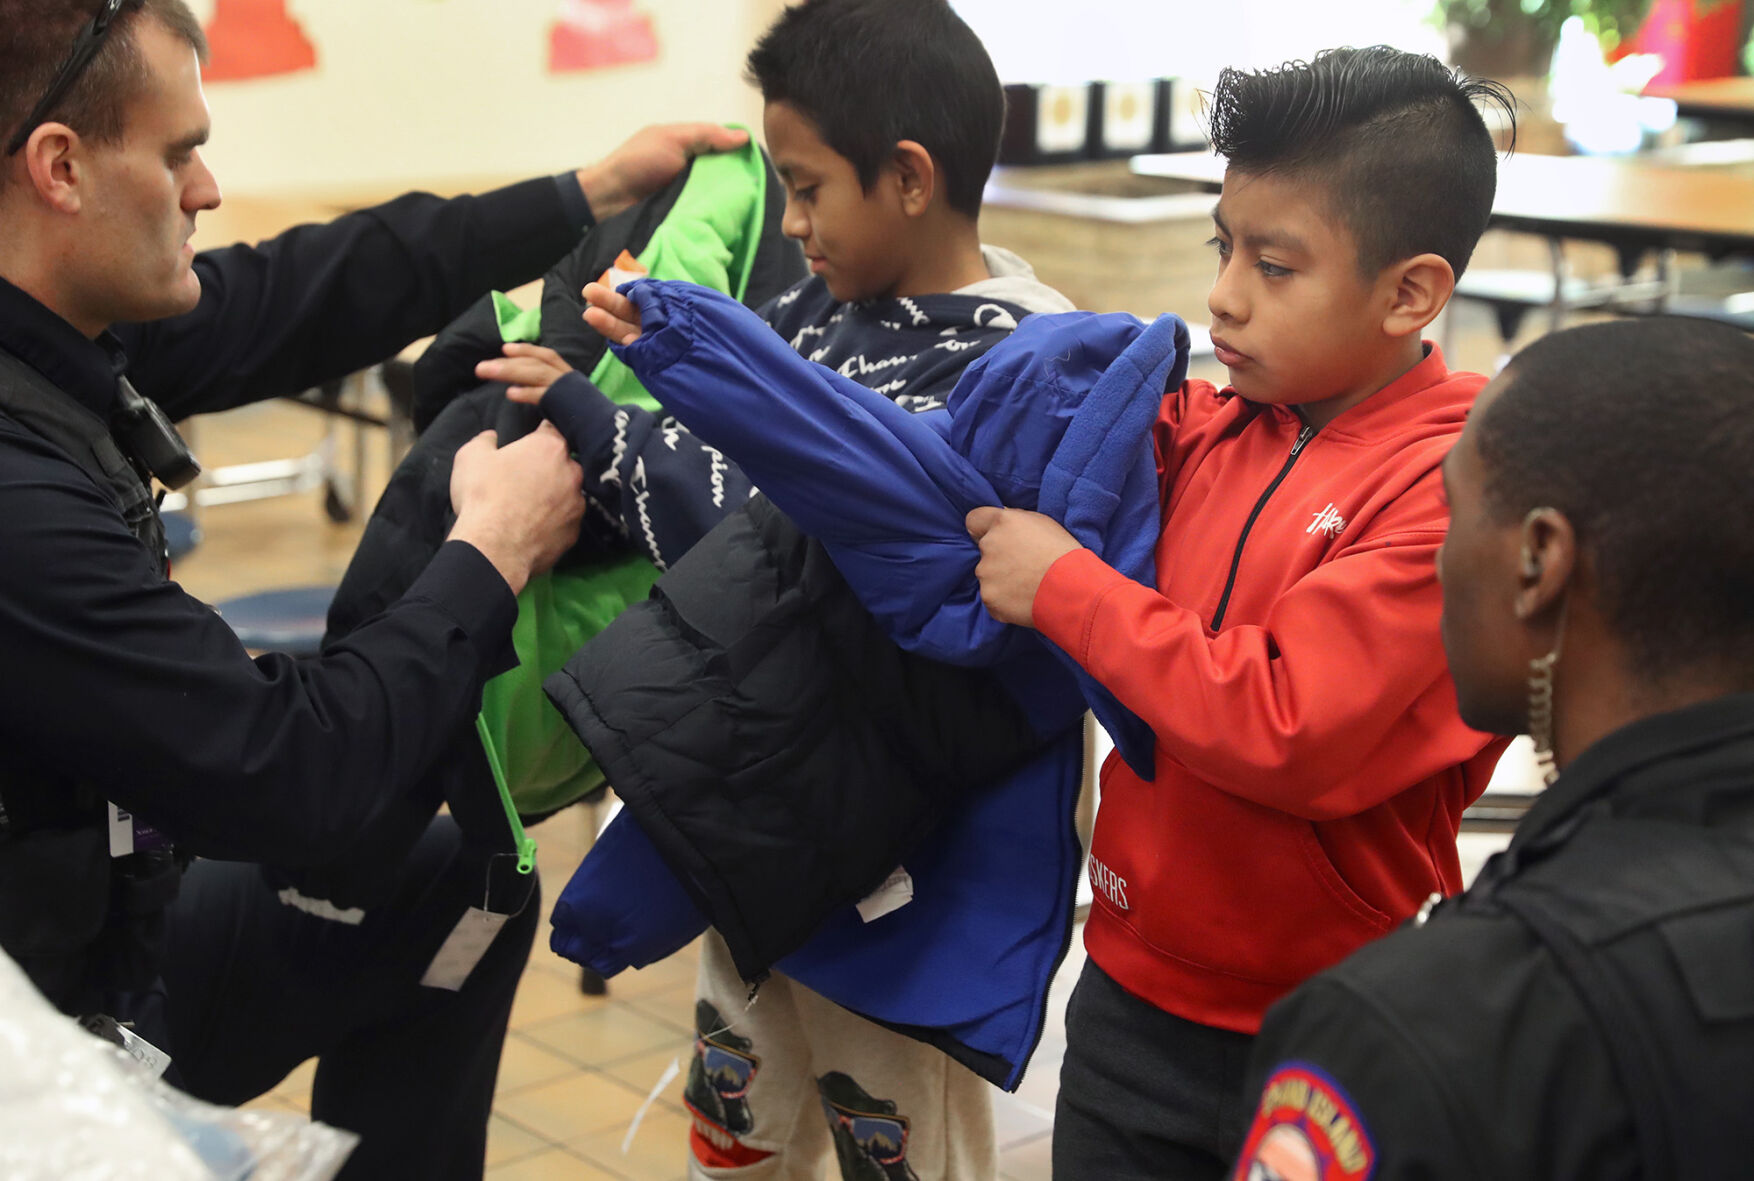 LOOK: Elementary students get new winter coats